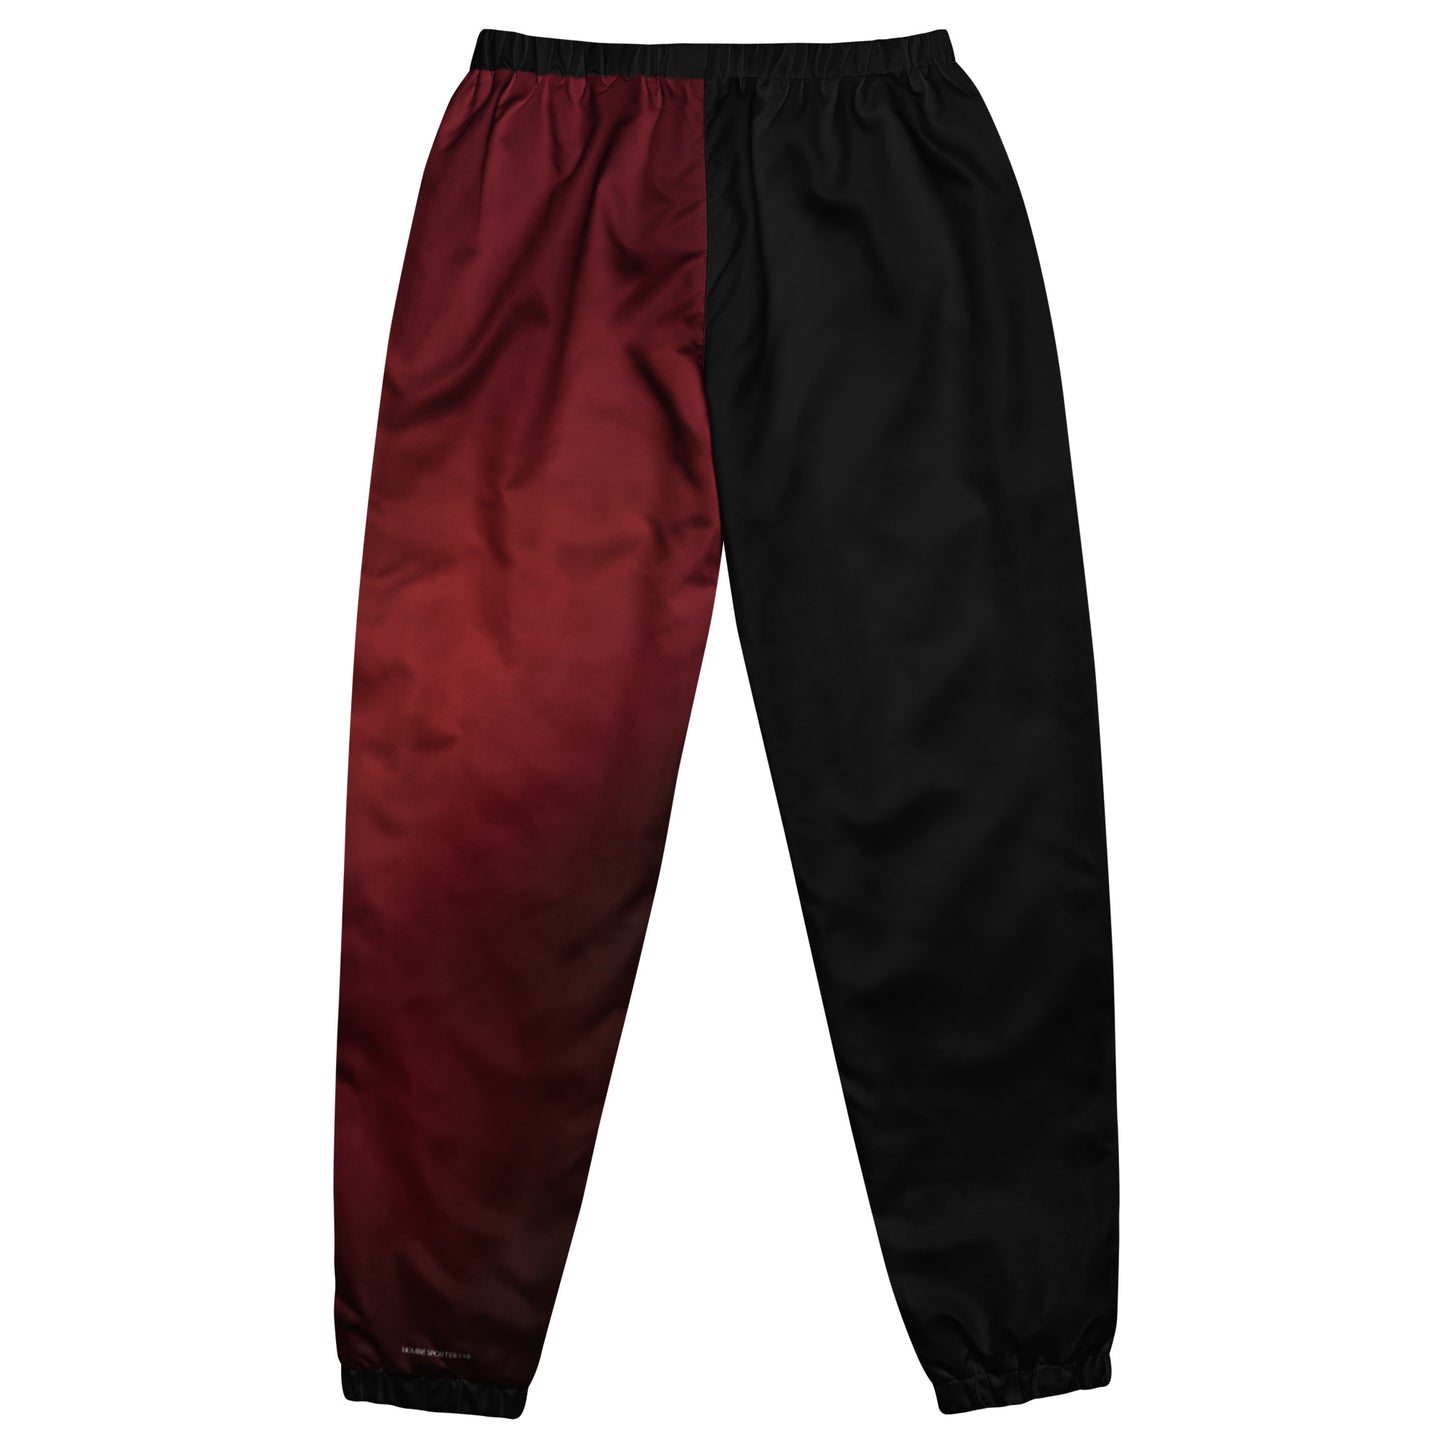 Humble Sportswear, men's color block red lightweight pants 